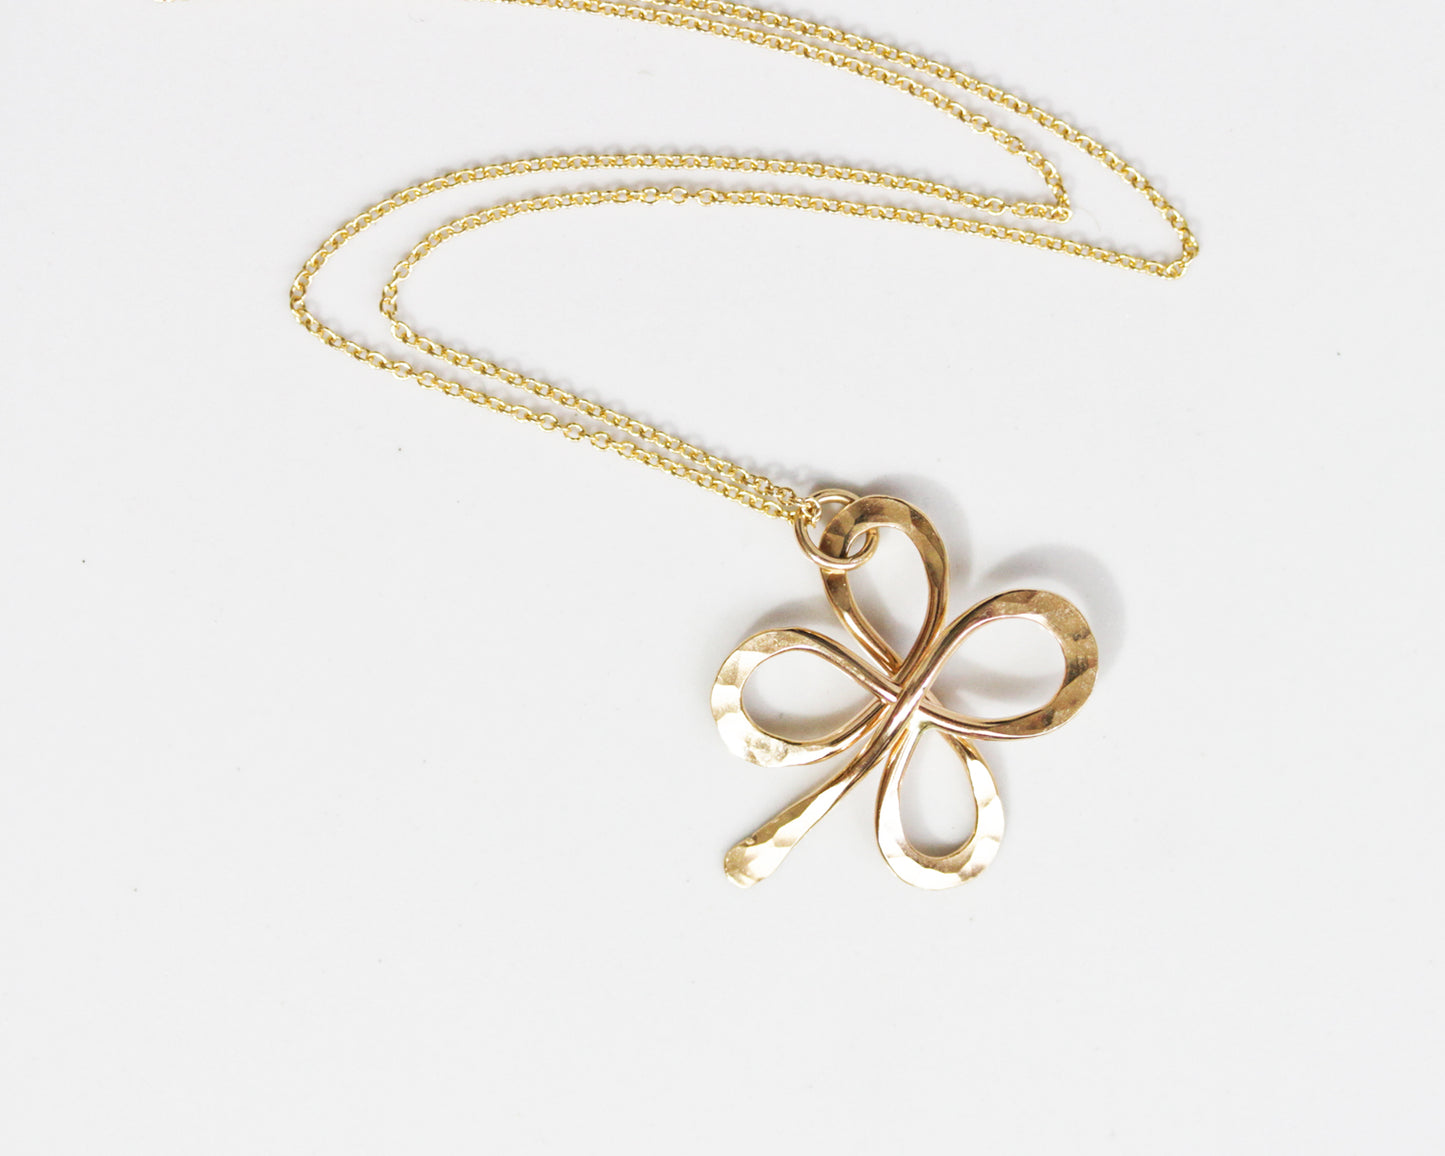 Four Leaf Clover Necklace Charm Gold